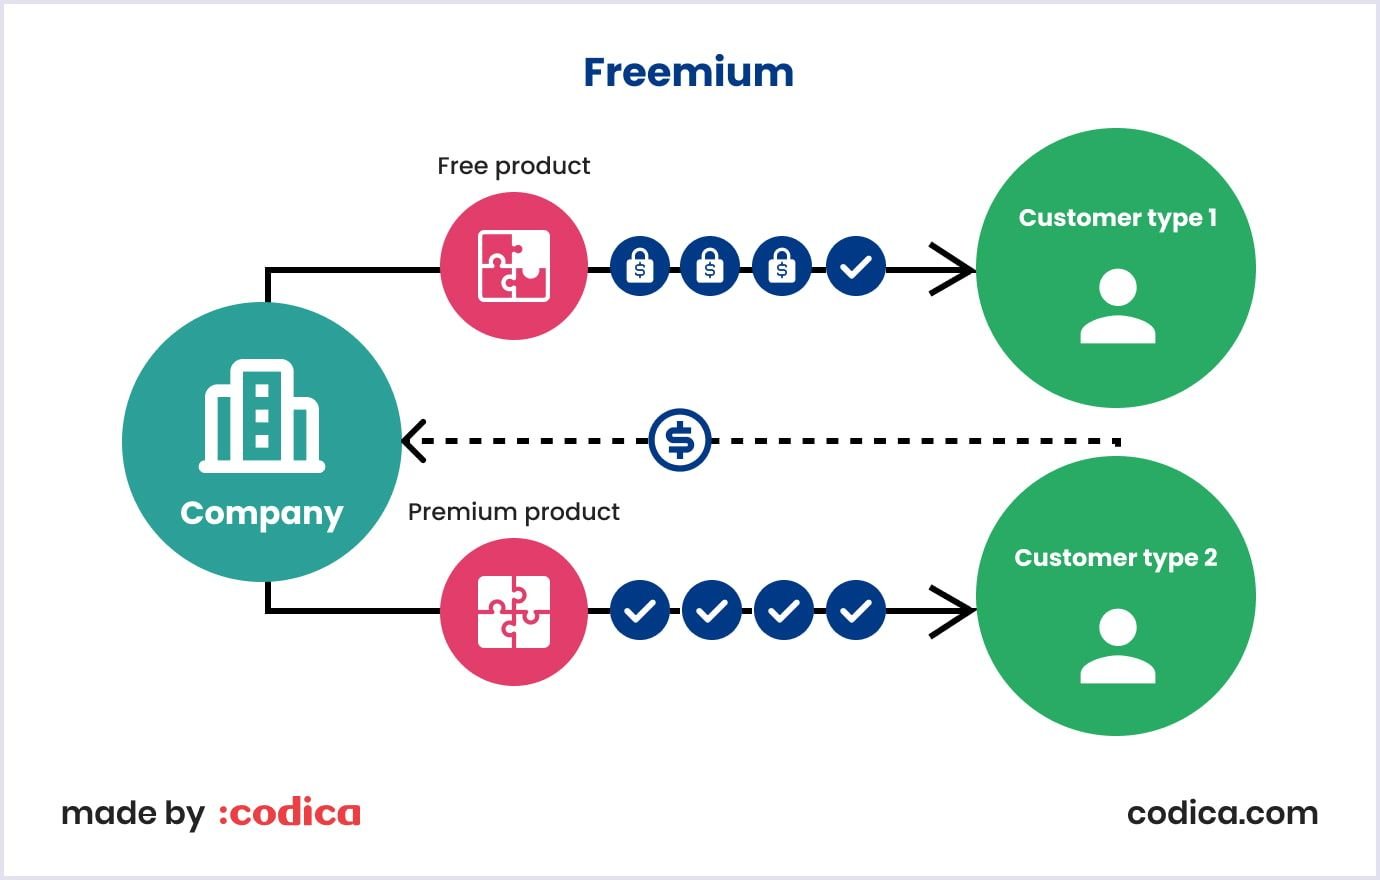 How freemium model works